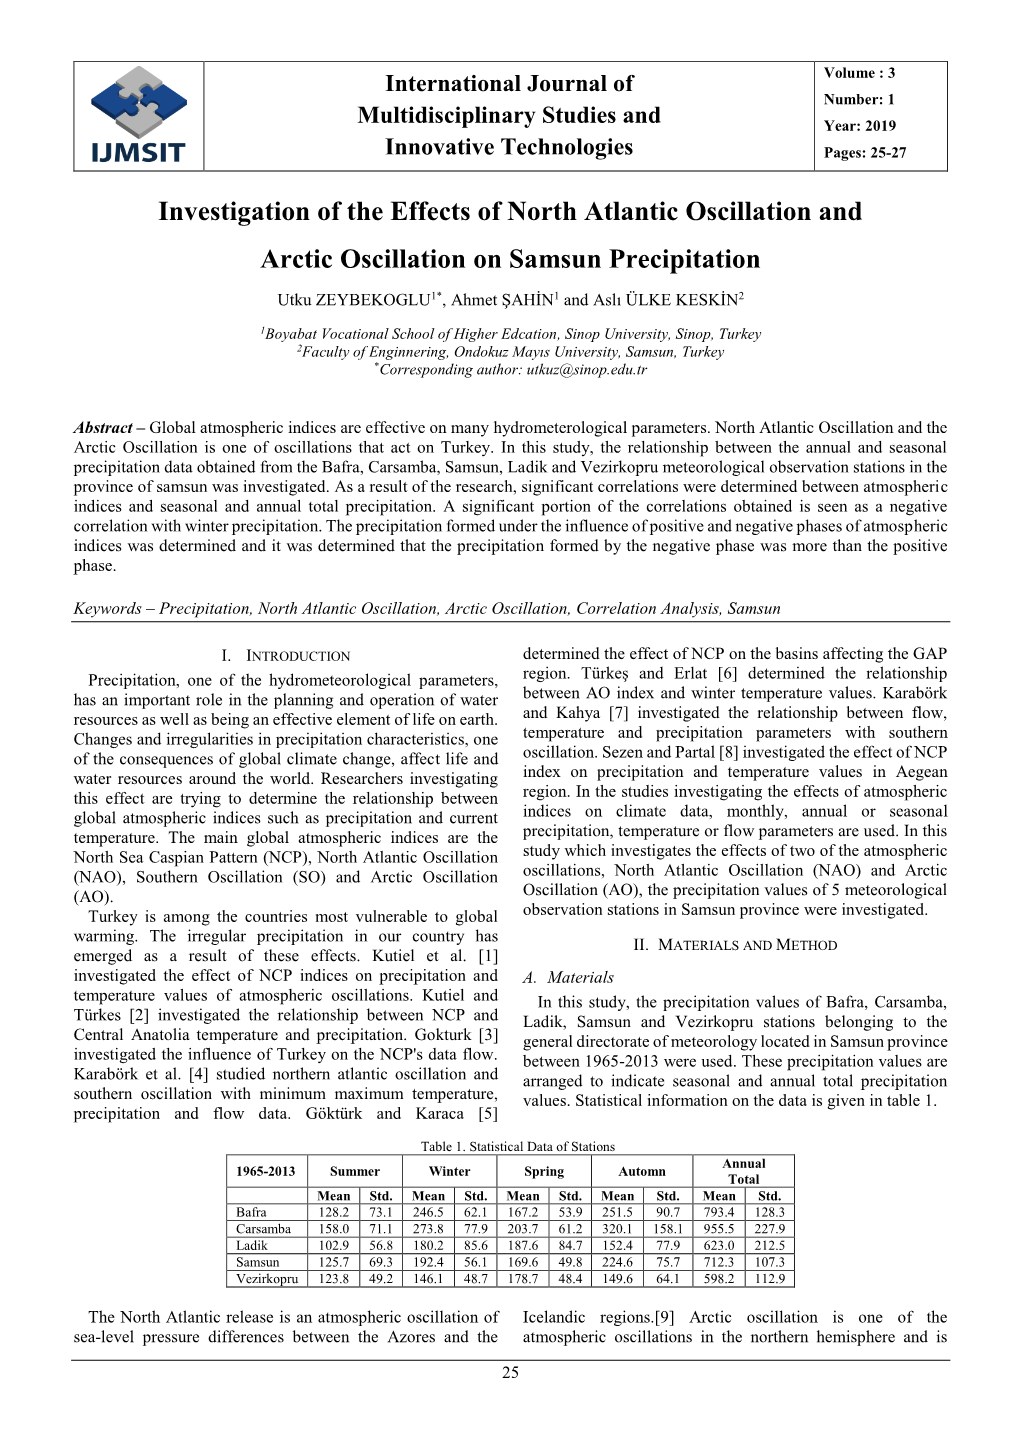 Investigation of the Effects of North Atlantic Oscillation and Arctic Oscillation on Samsun Precipitation